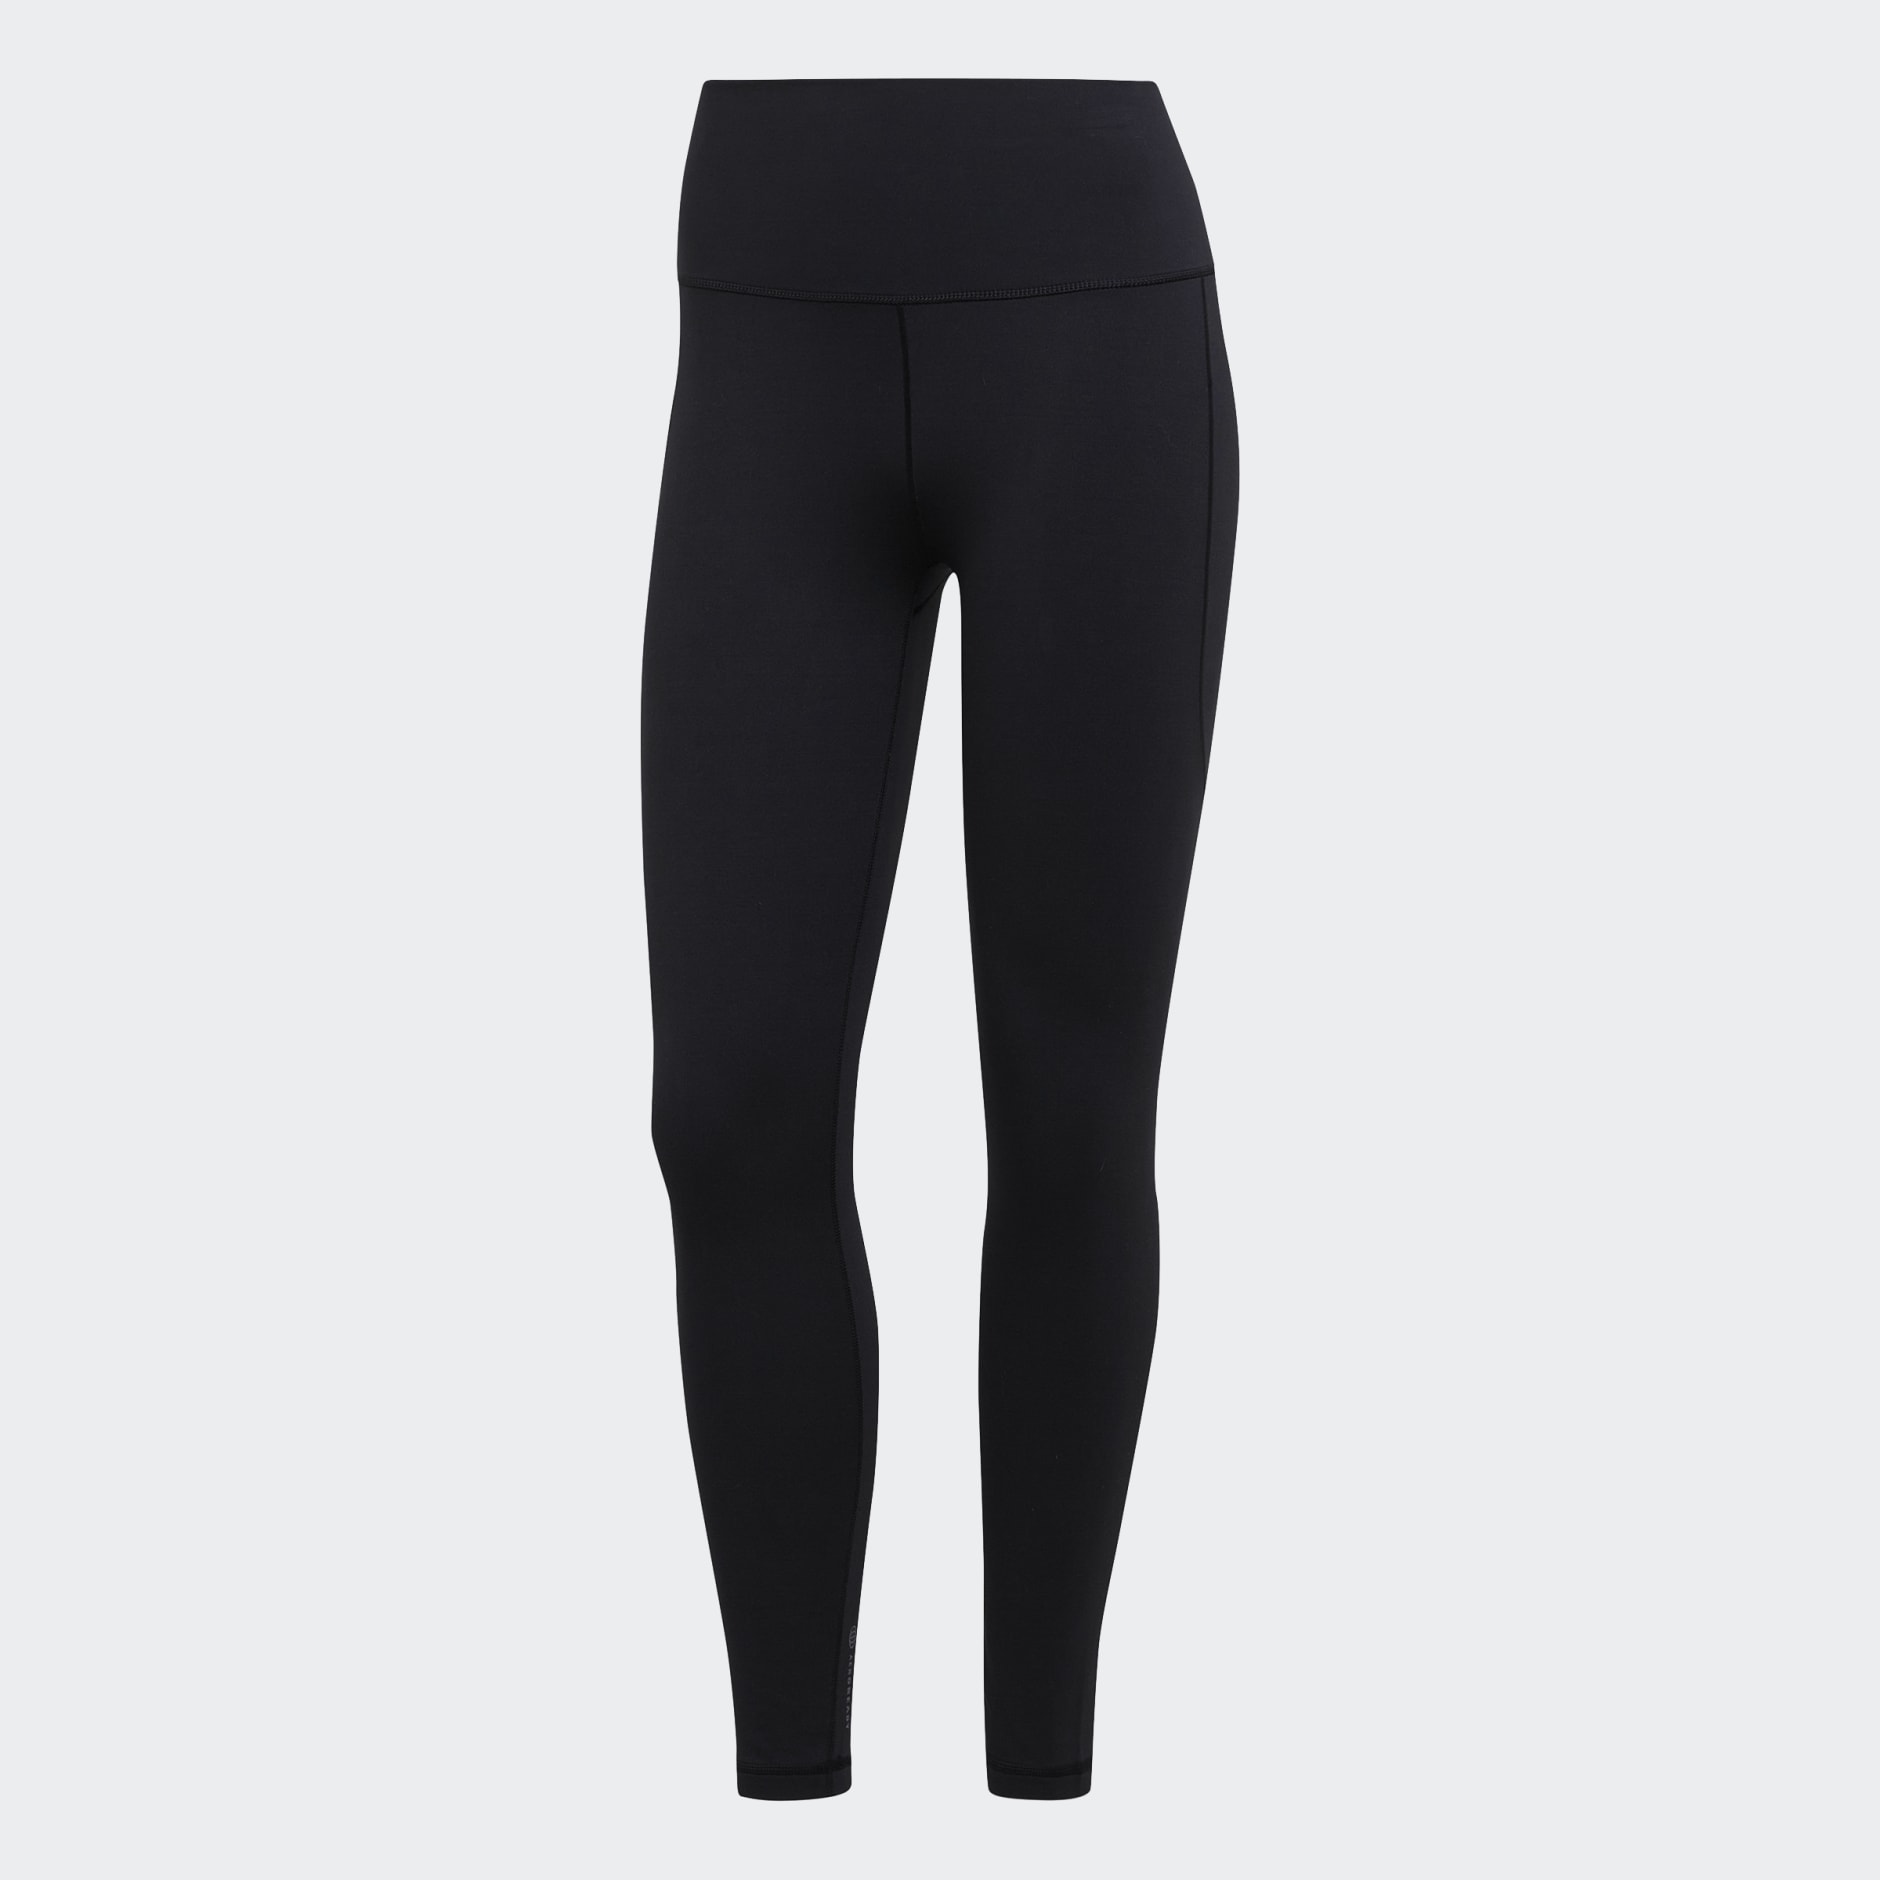 Women's Clothing - adidas Yoga Studio 7/8 Leggings - Black